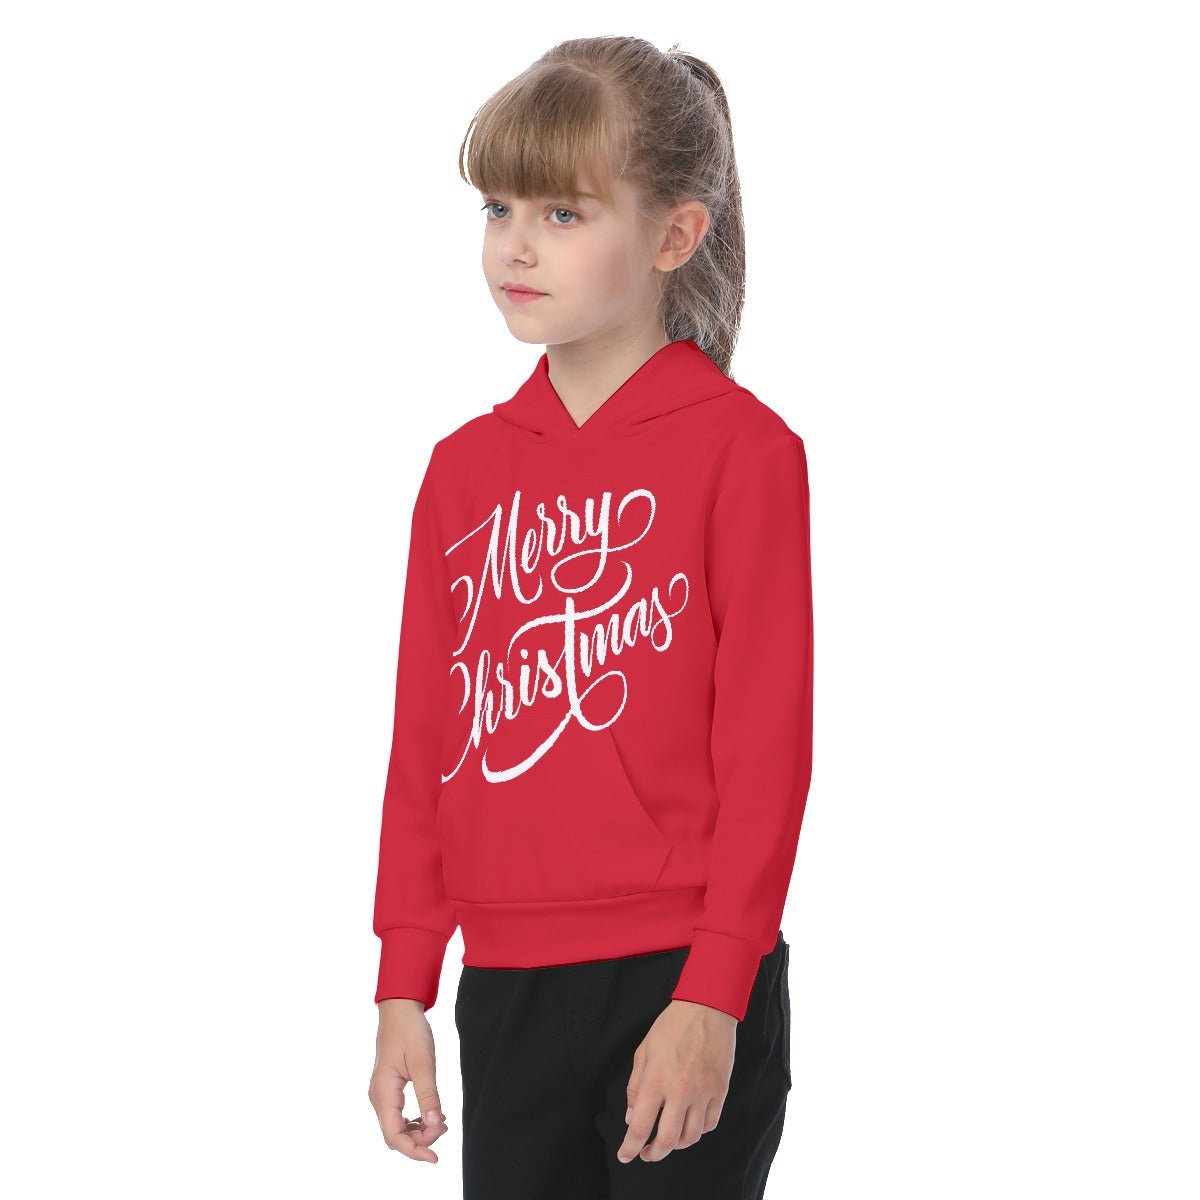 Kid's Fleece Christmas Hoodie - Merry Christmas - Red - Festive Style